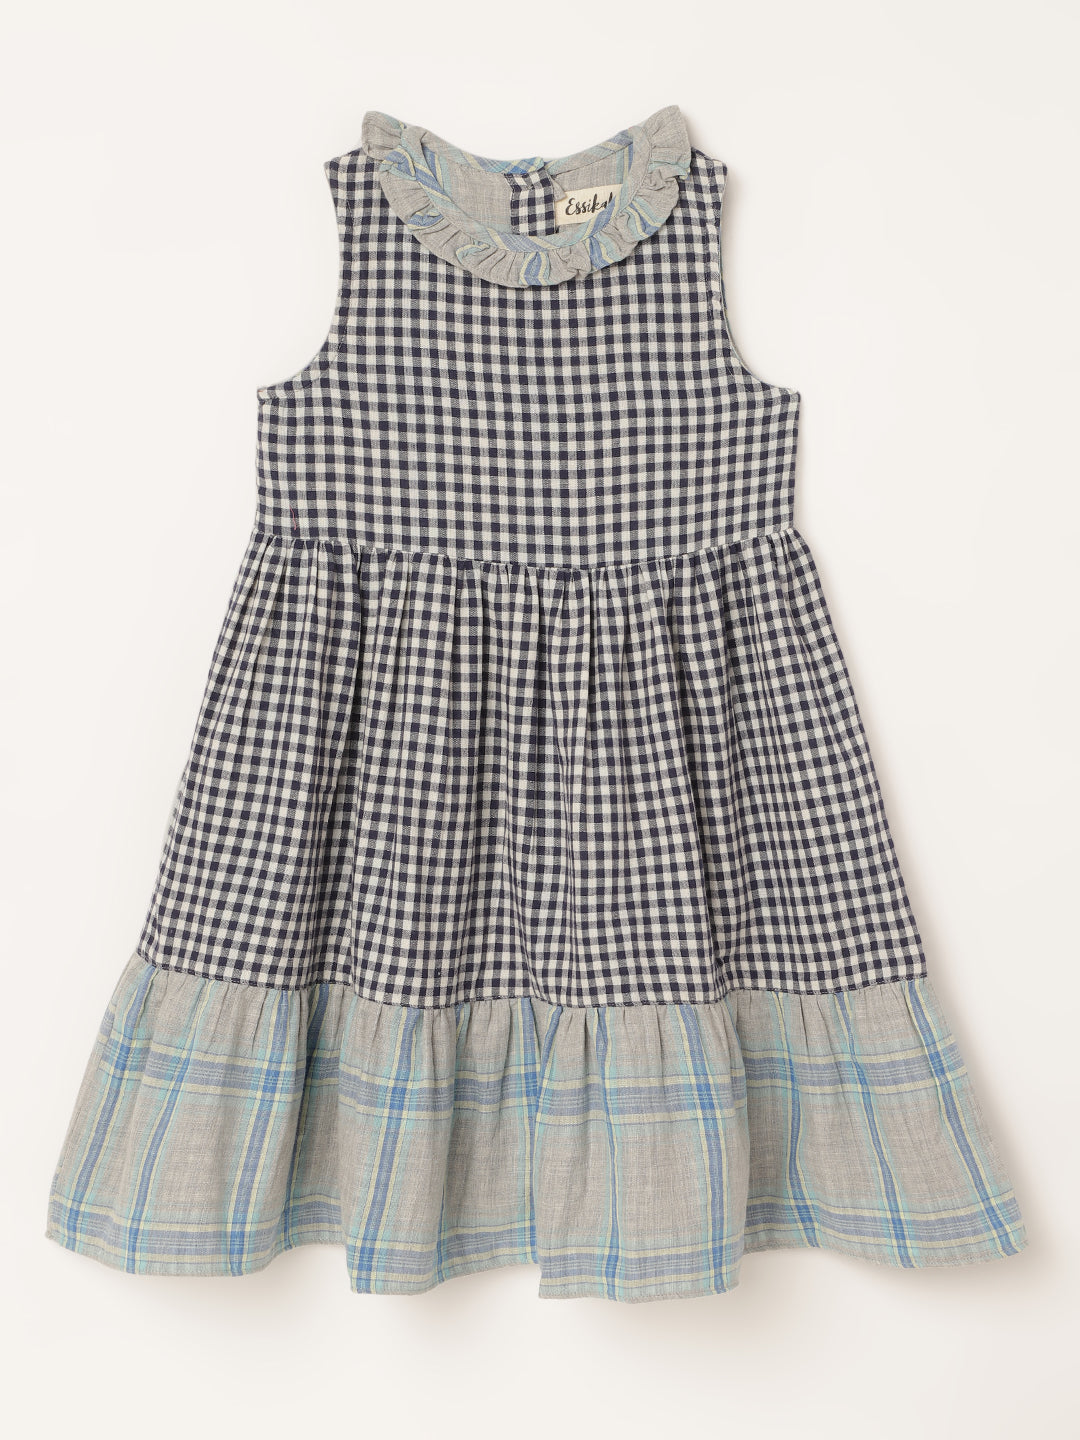 Girls Sleeveless Cotton Blue Checks Dress - 1yr to 8 yrs - Front